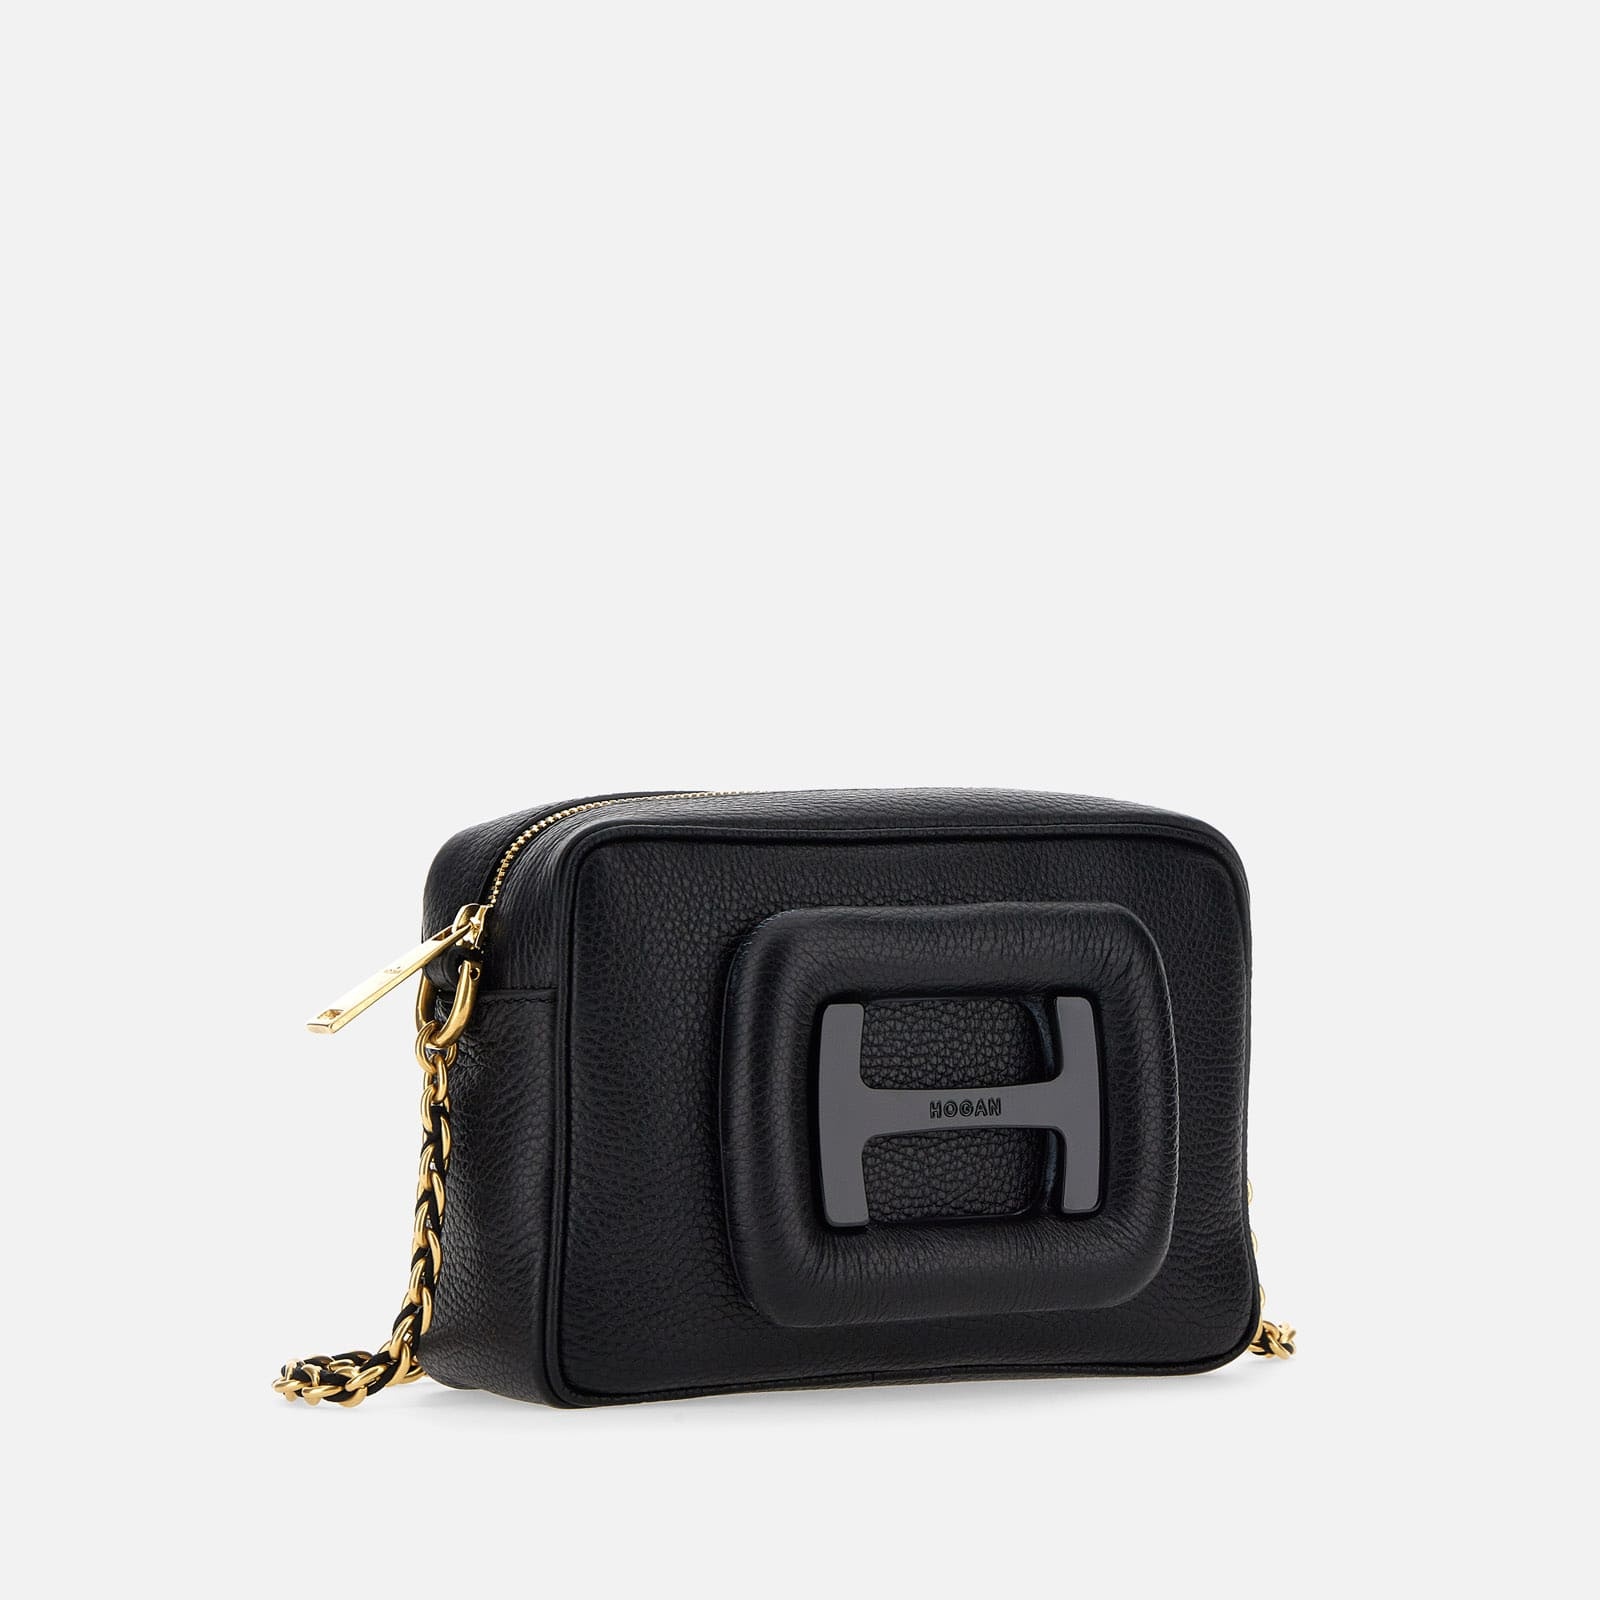 Hogan H-Bag Camera Bag Small Black - 3